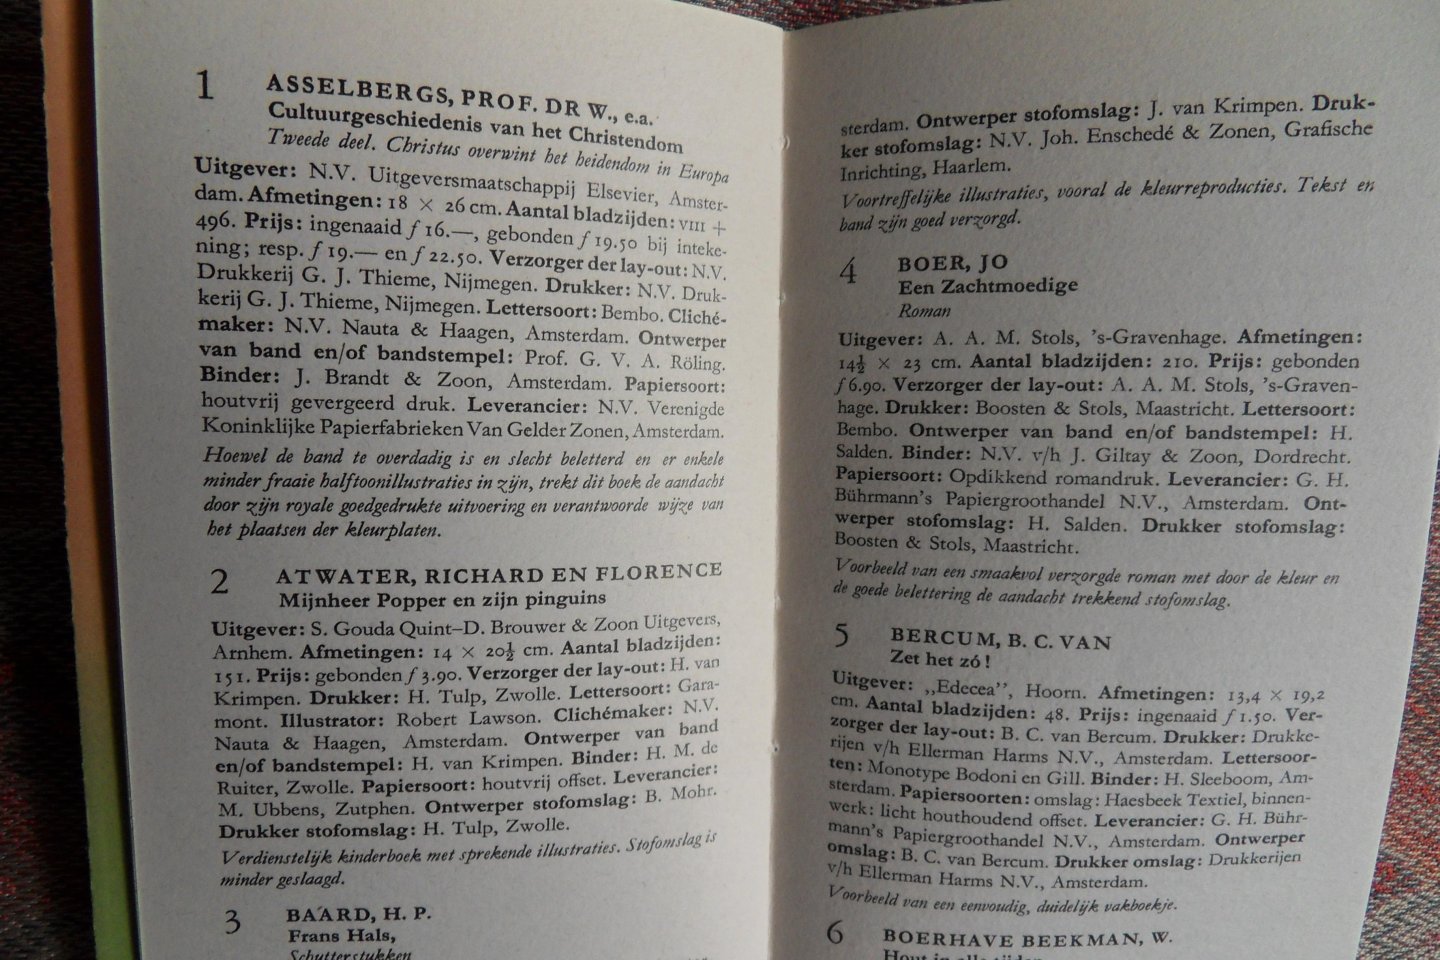 Radermacher Schorer, jhr. dr. M.R.; Ovink, dr. G.W.; e.a. - De best verzorgde vijftig boeken van 1949.